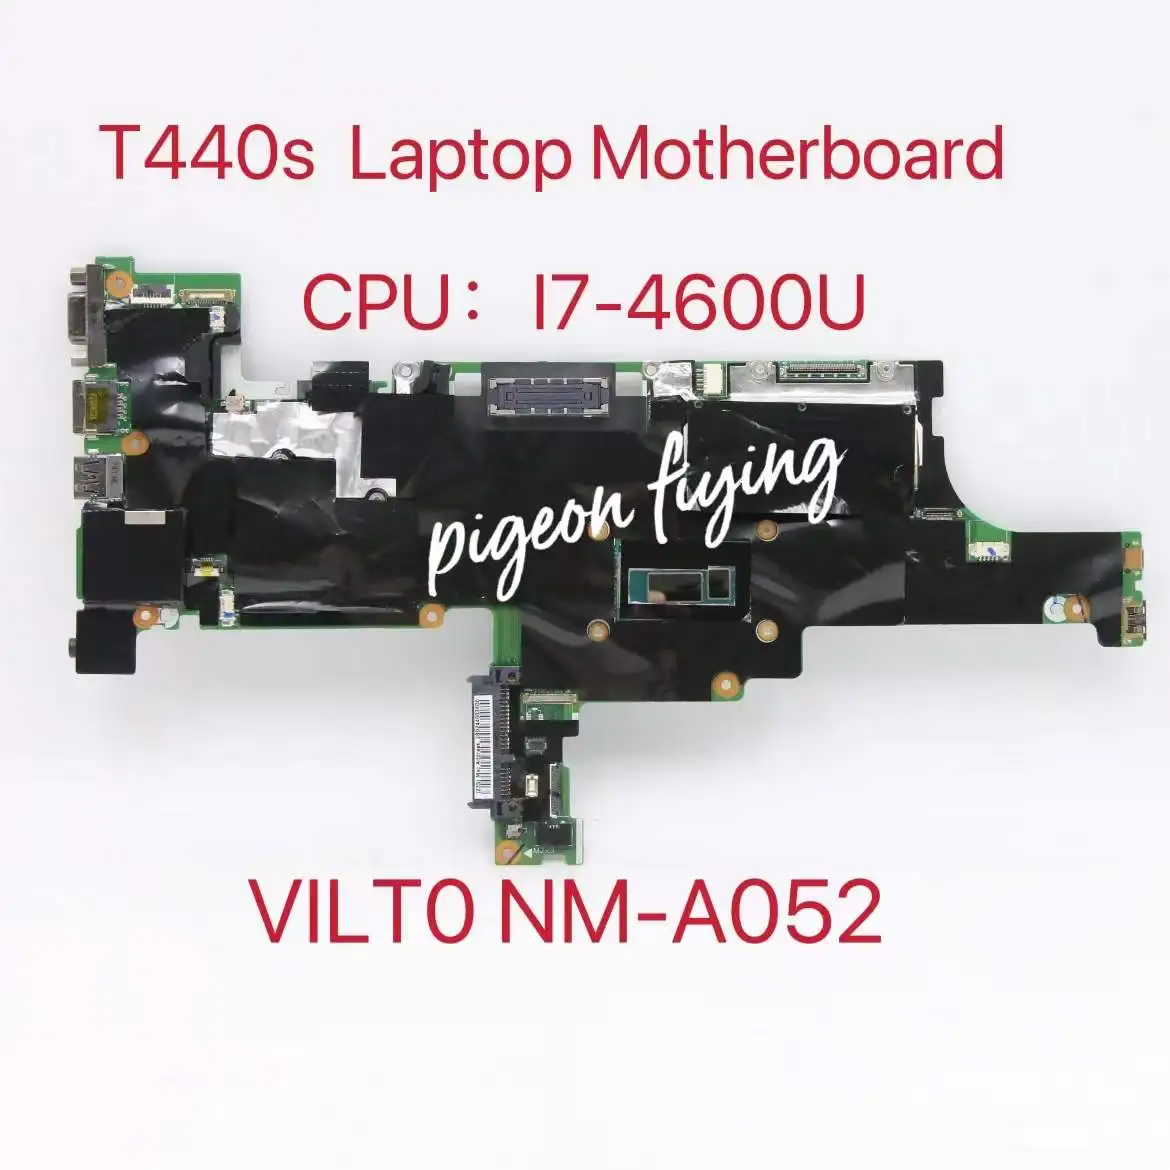 

VILT0 NM-A052 For Lenovo Thinkpad T440S Laptop Motherboard CPU: I7-4600U 4G-RAM FRU:04X3962 04X3964 04X3963 04X3965 100% Test Ok